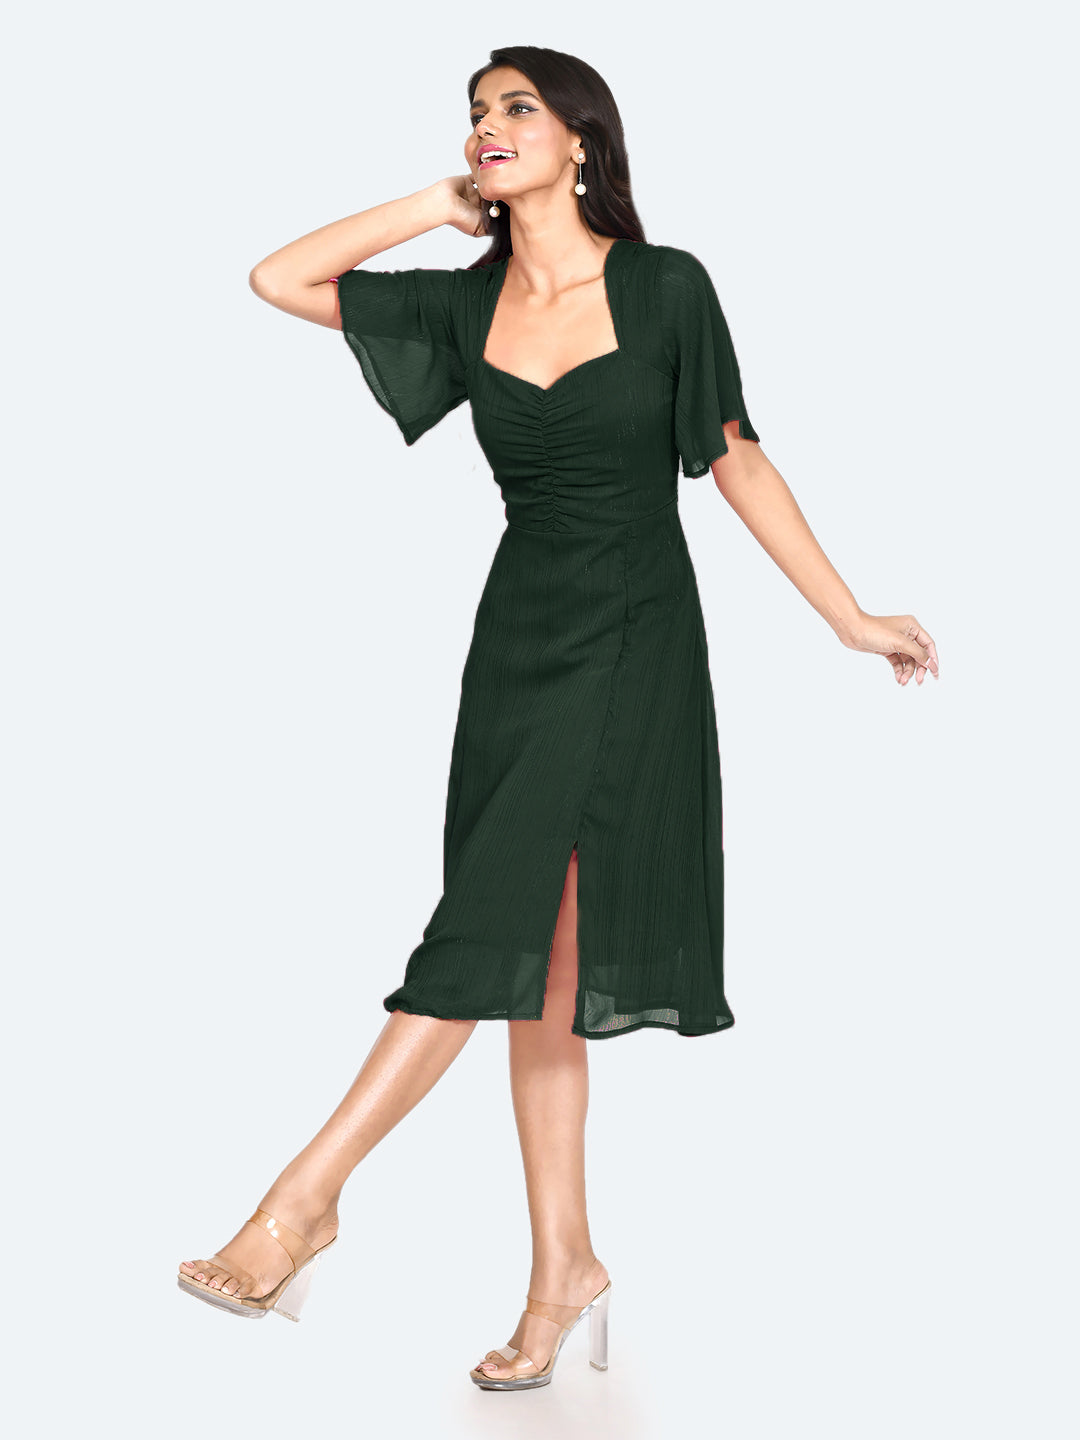 Green-Solid-Ruched-Midi-Dress-for-Women-VD04040_152-BottleGreen-3